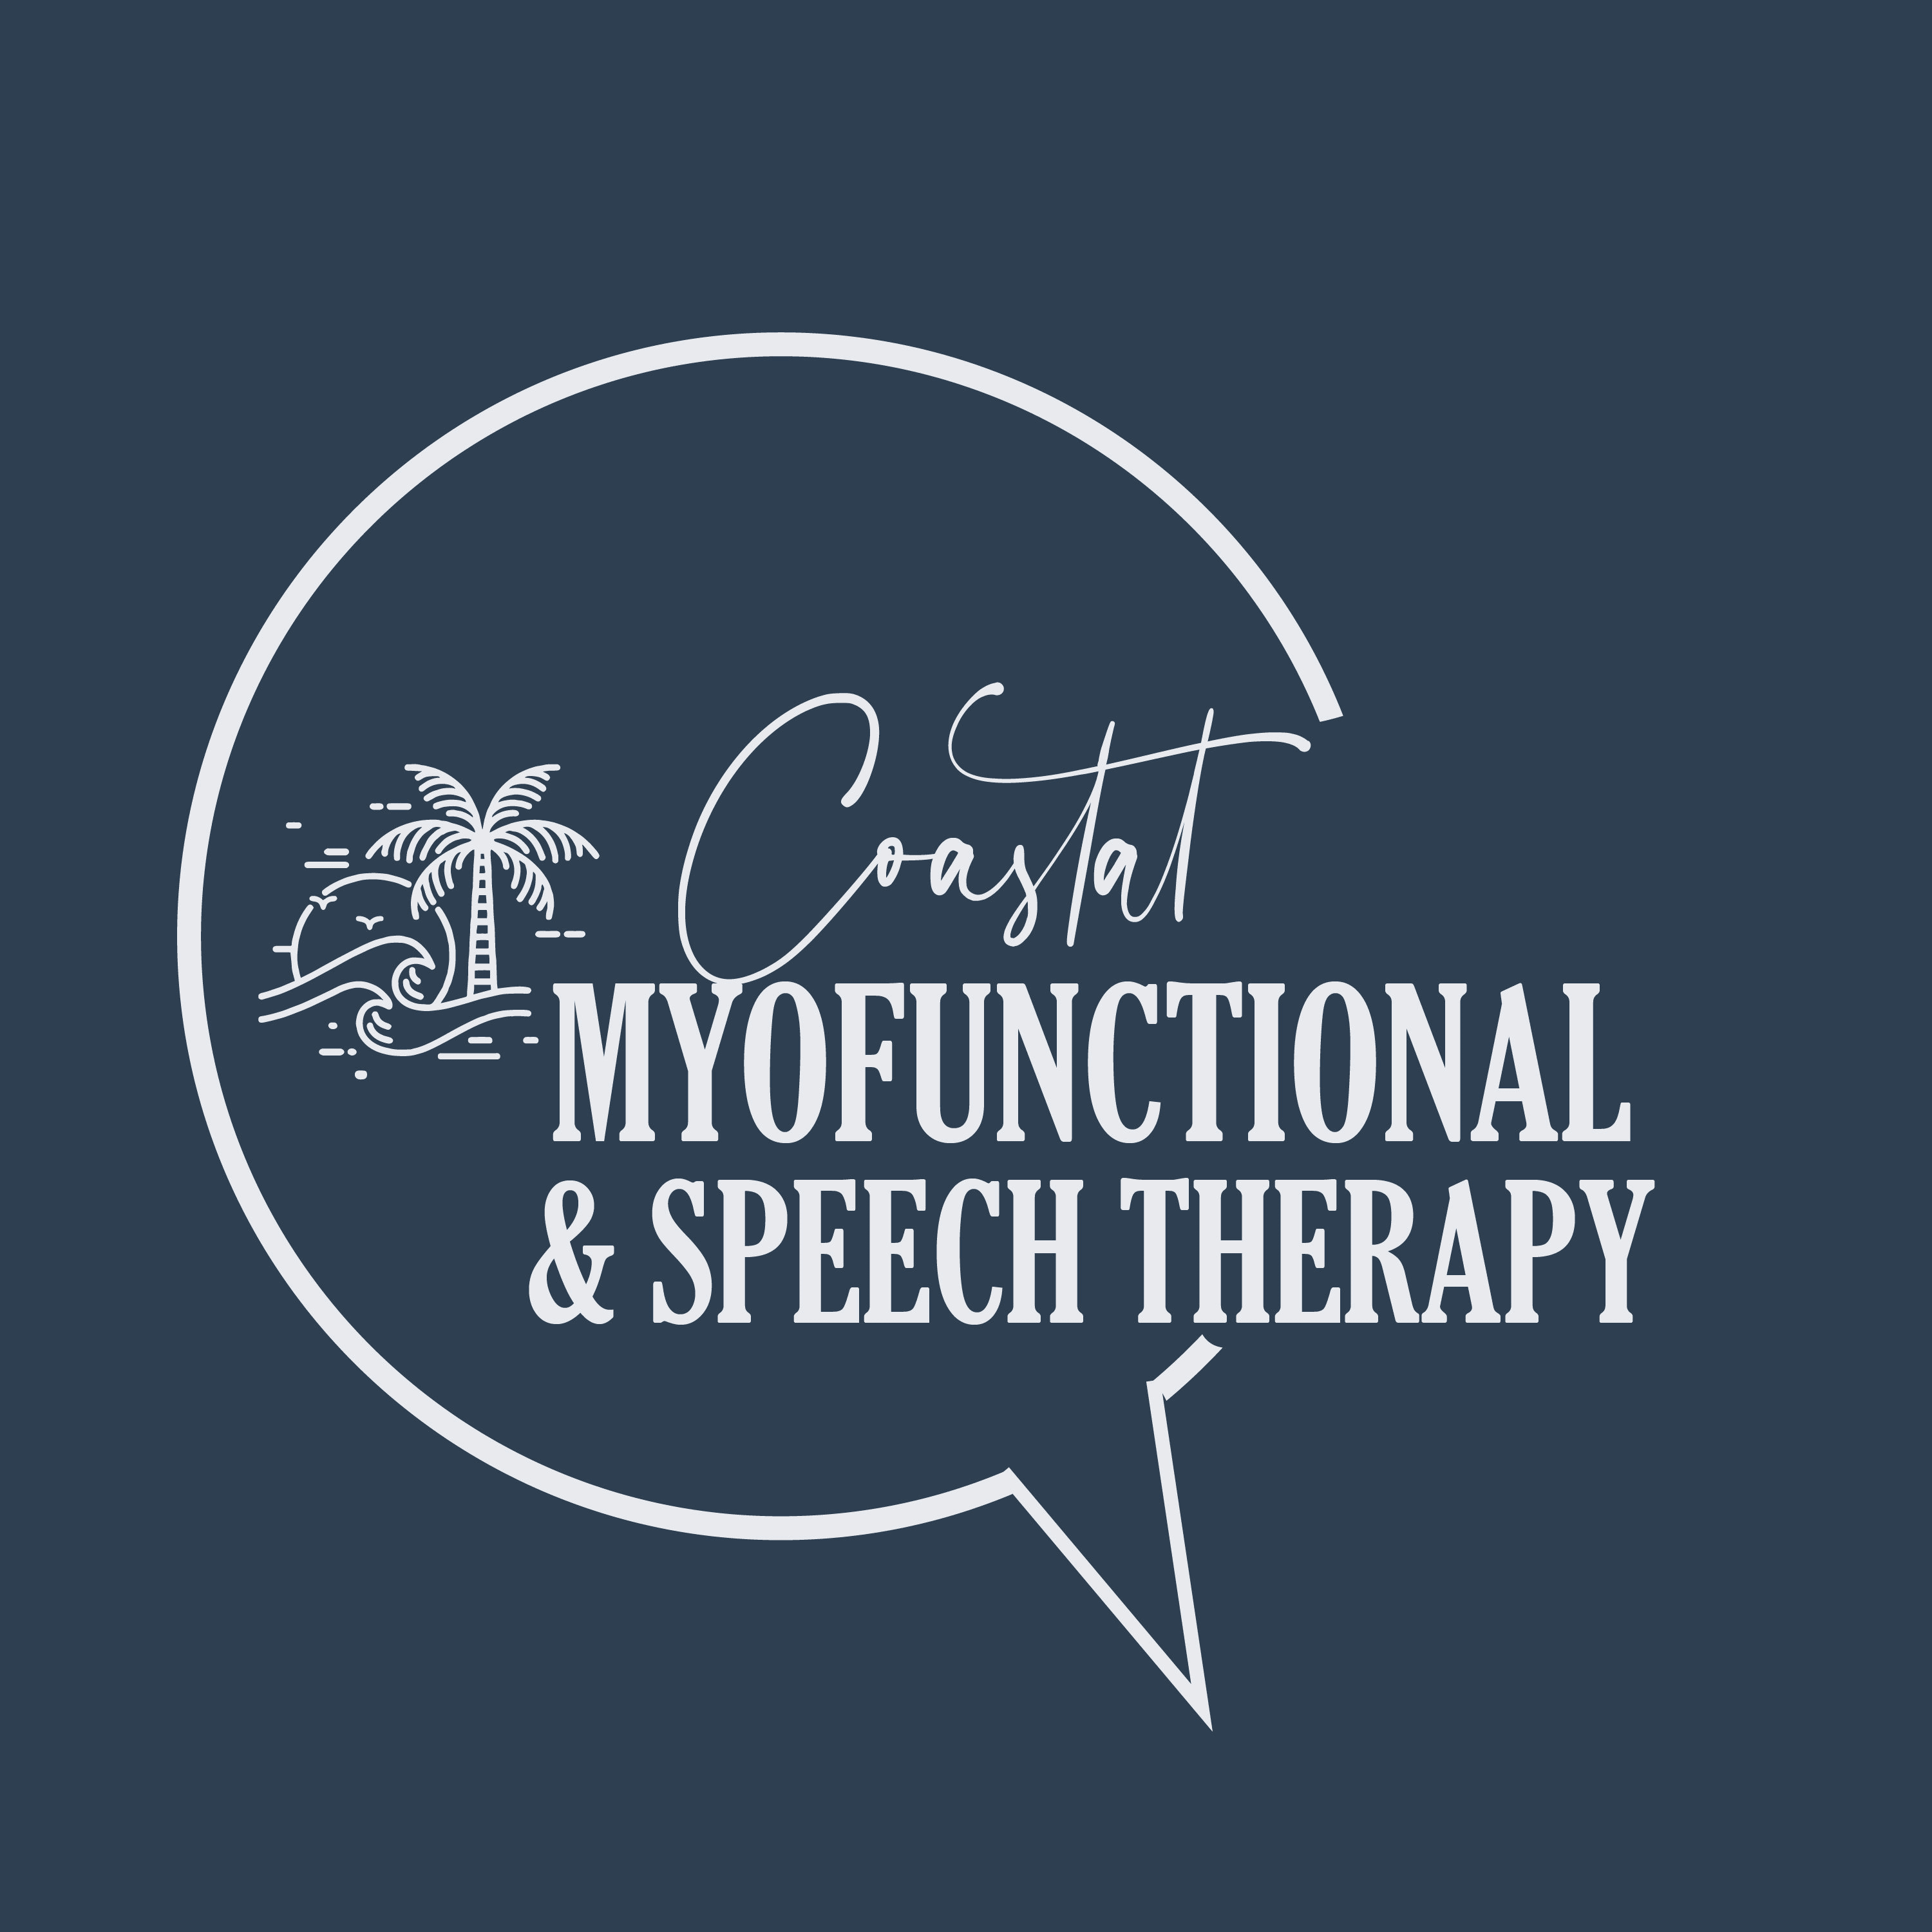 california speech therapy
california myofunctional therapy